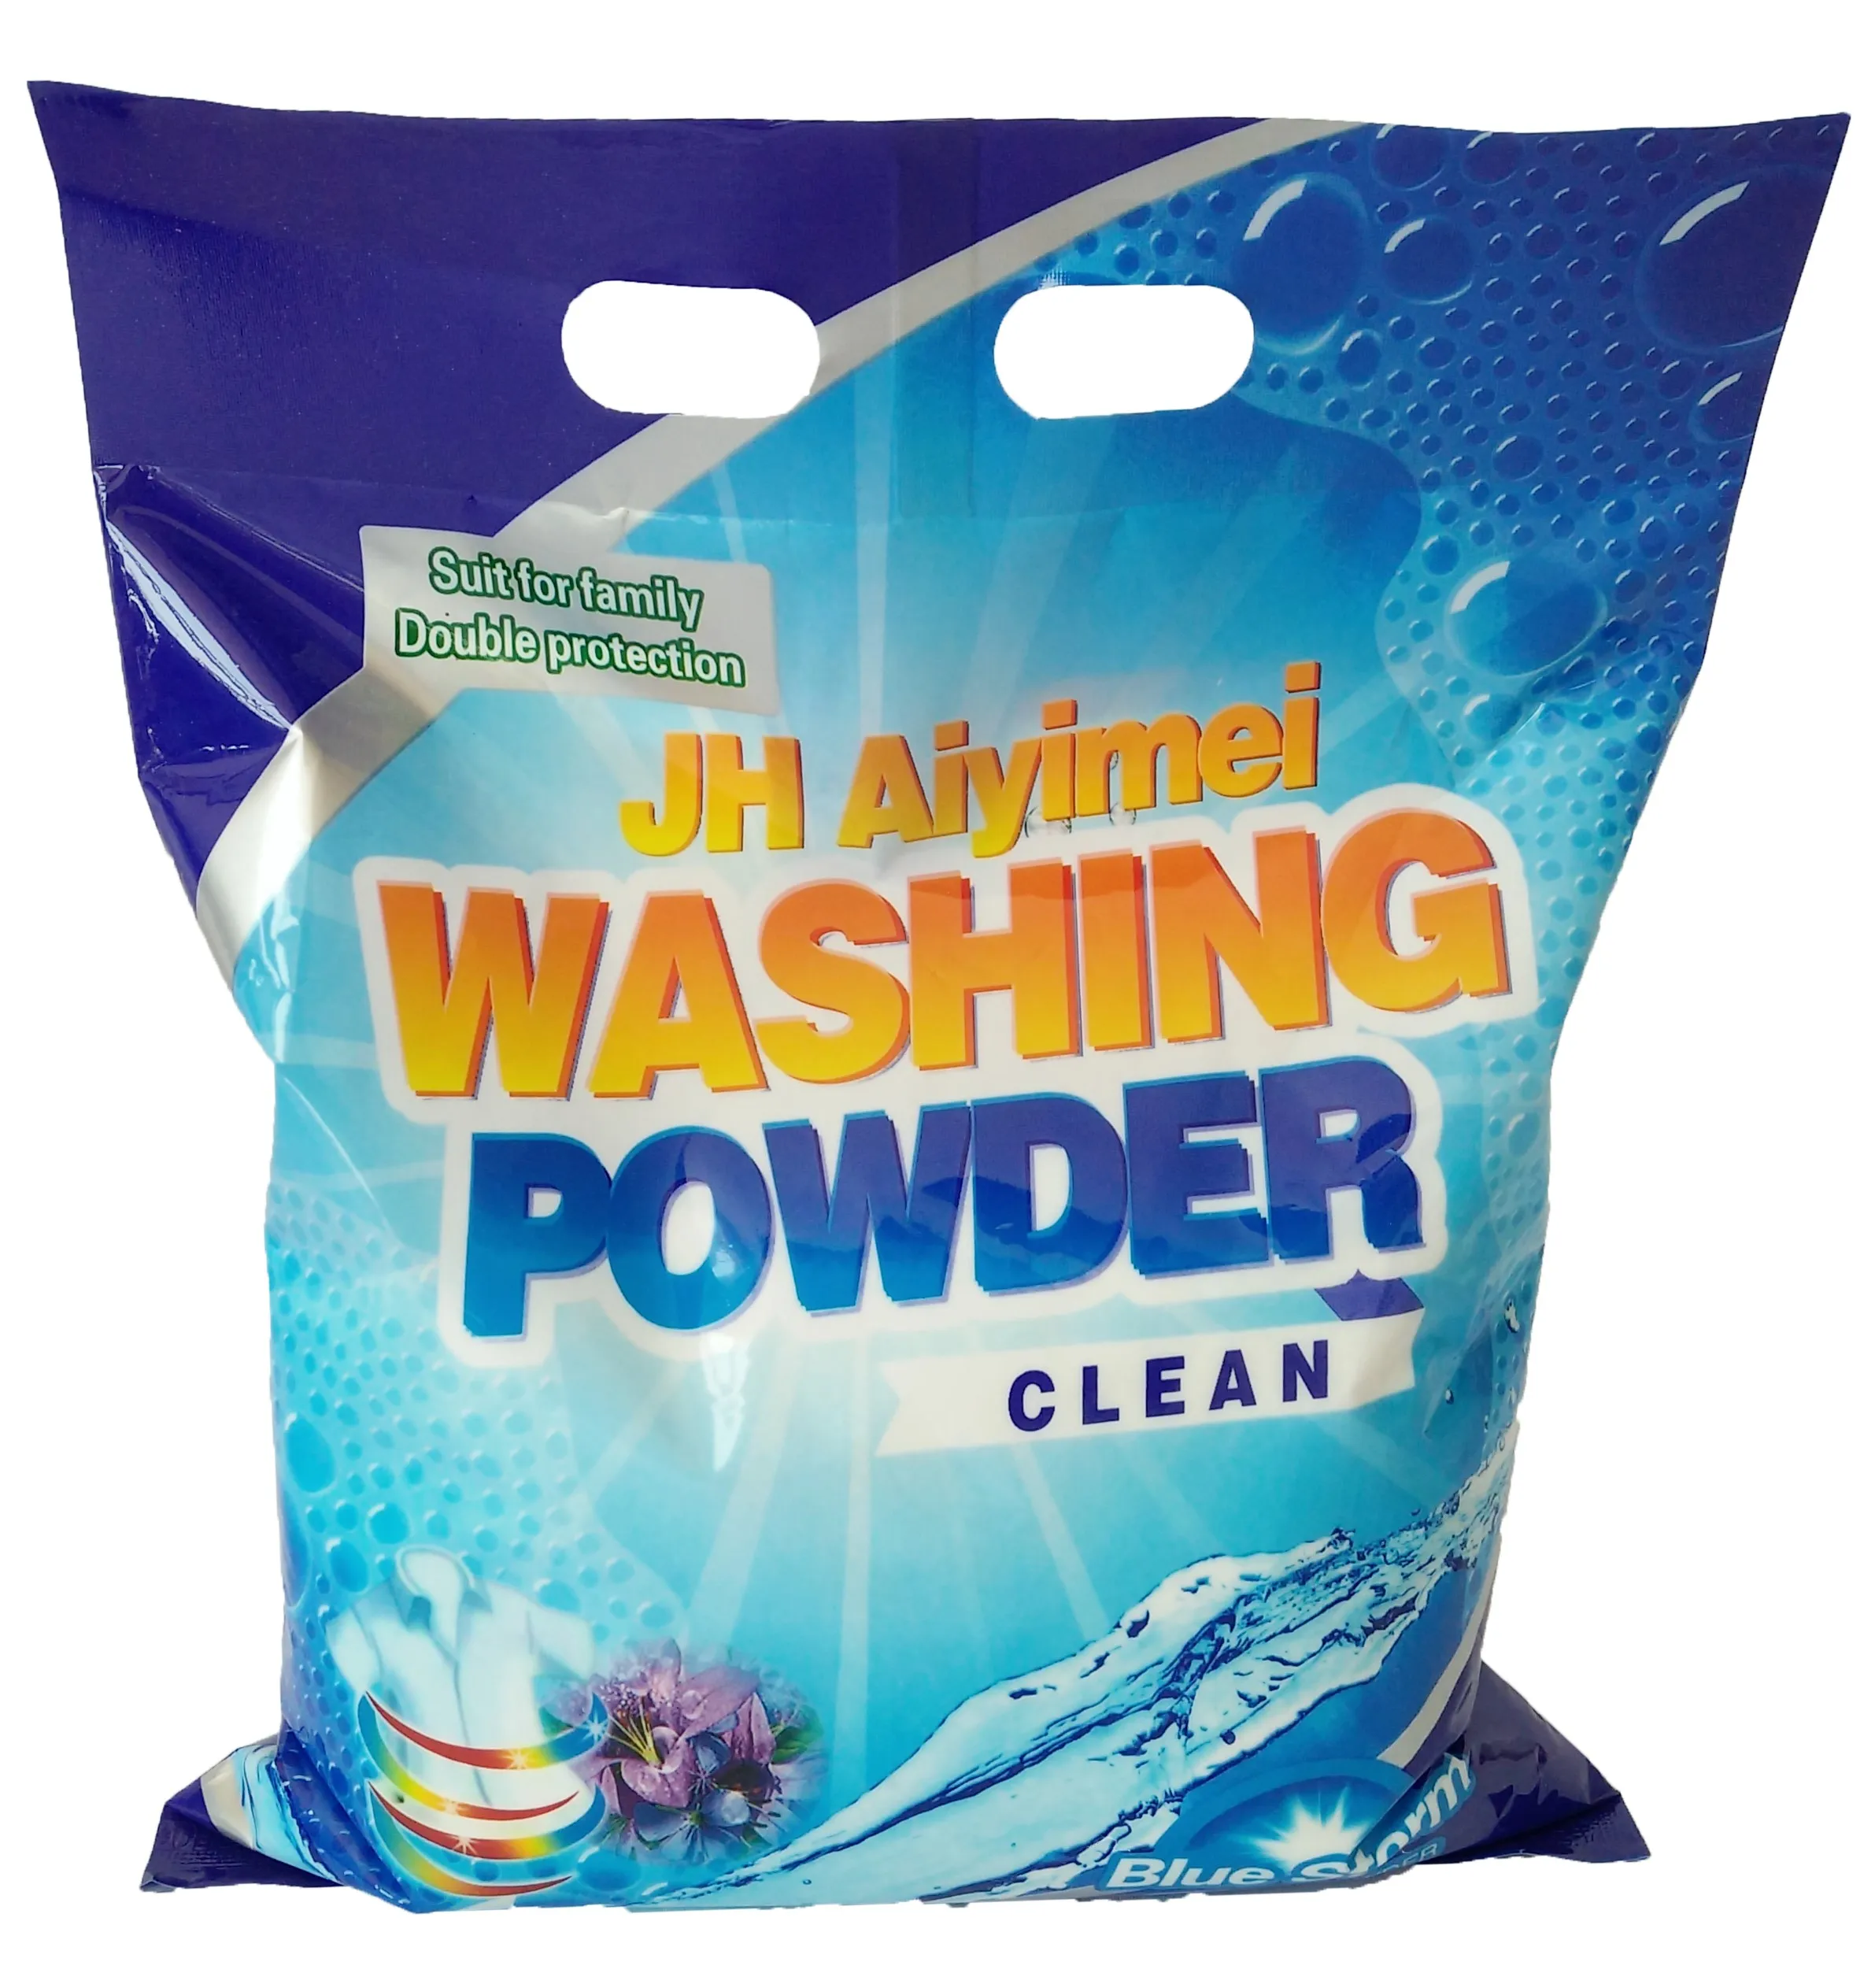 active excel chemical formula of washing powder